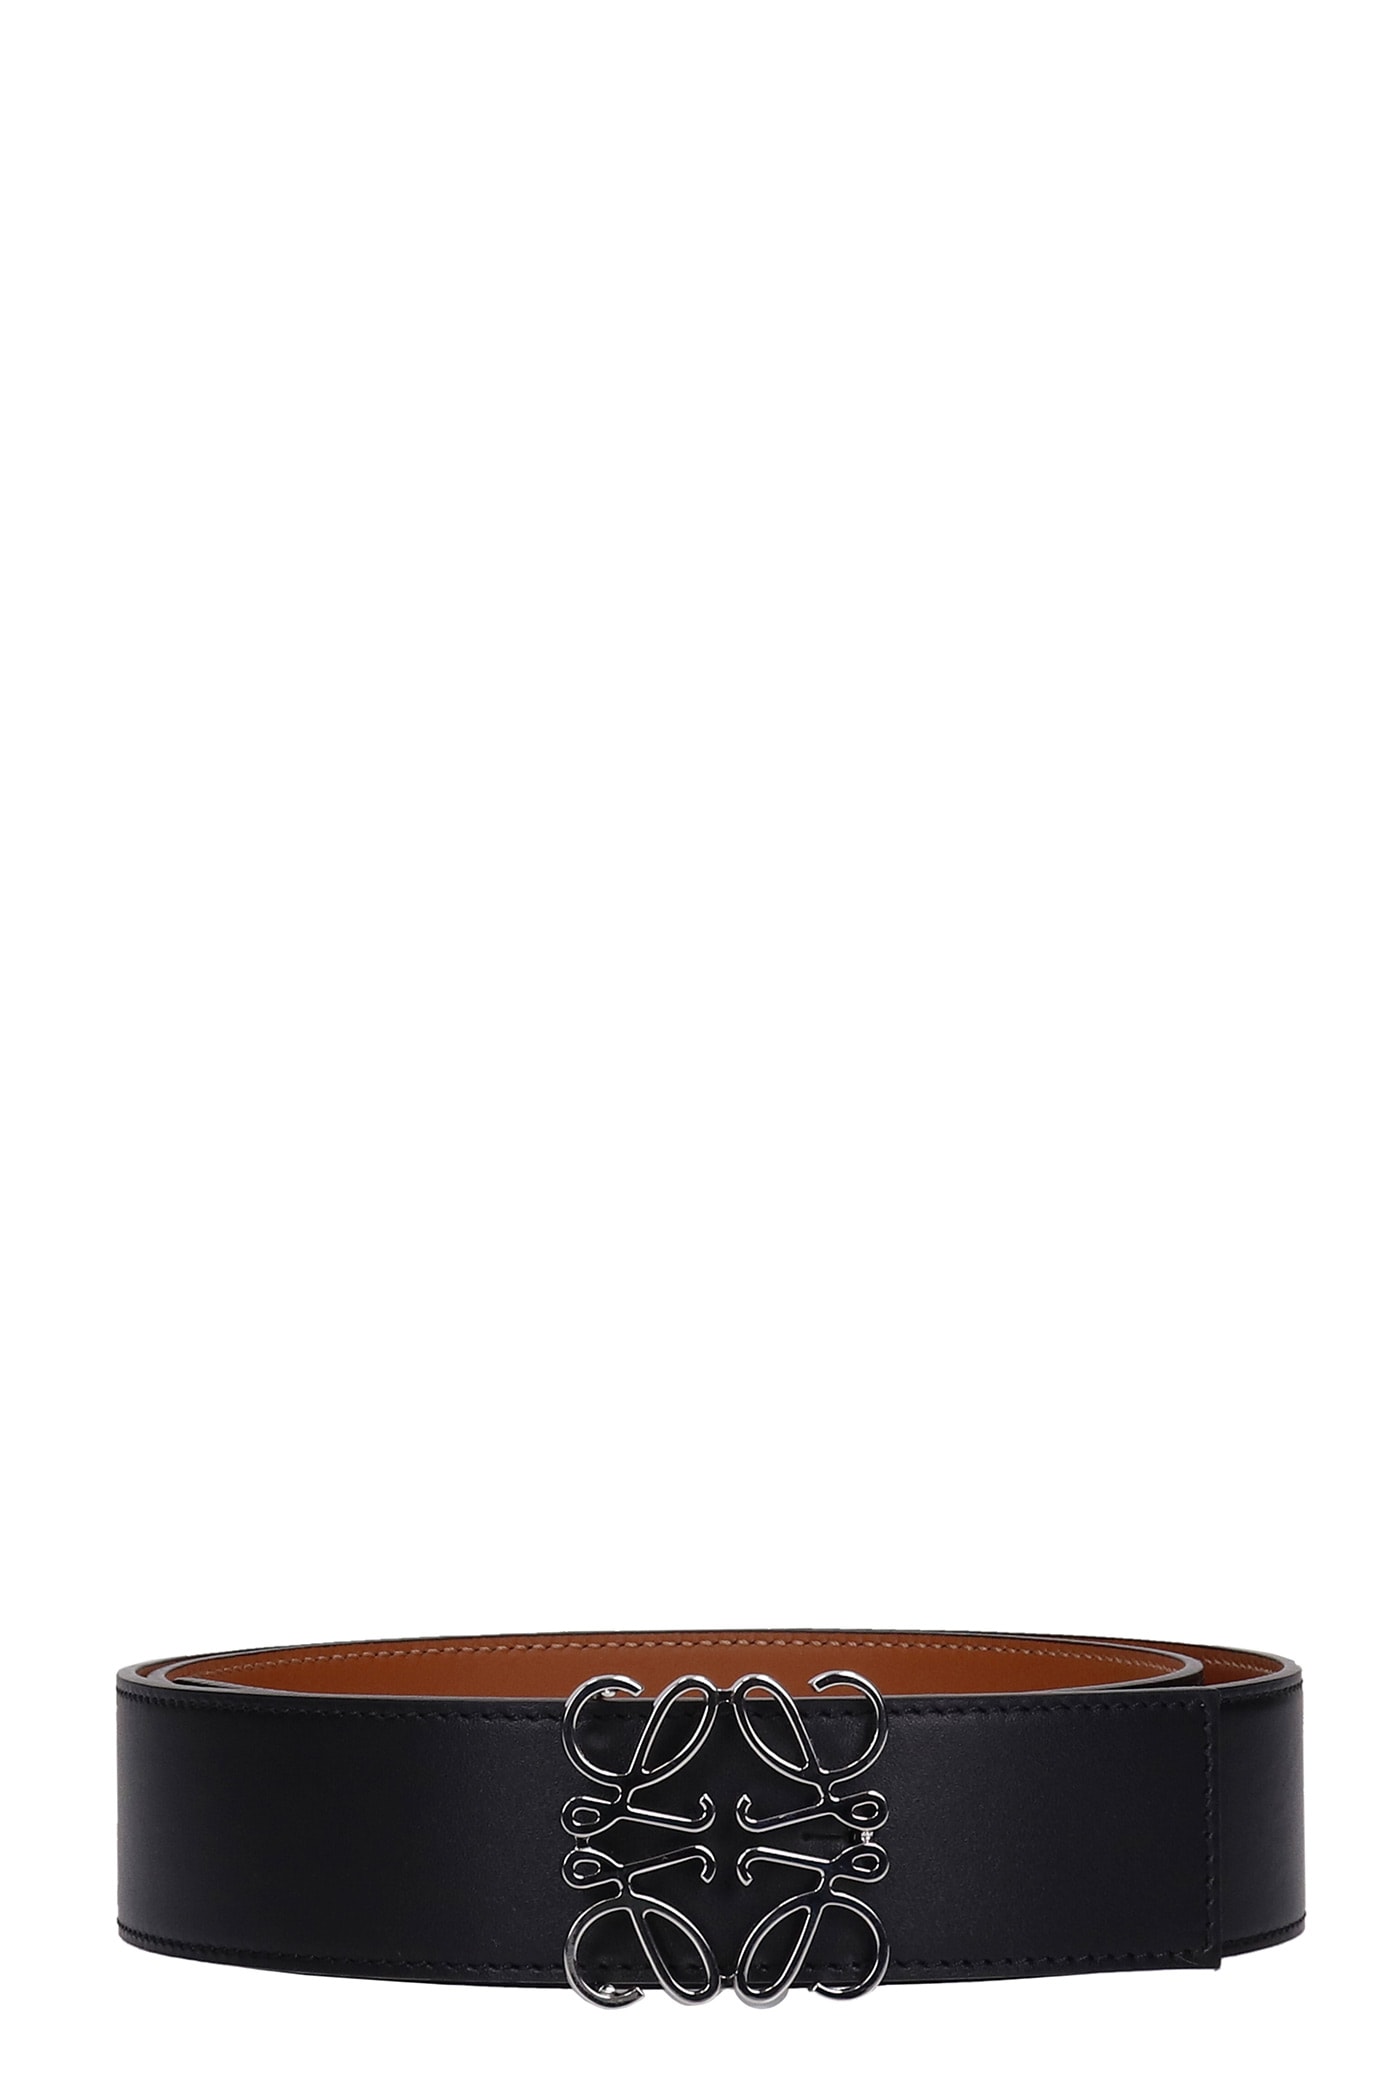 Loewe Belts In Black Leather